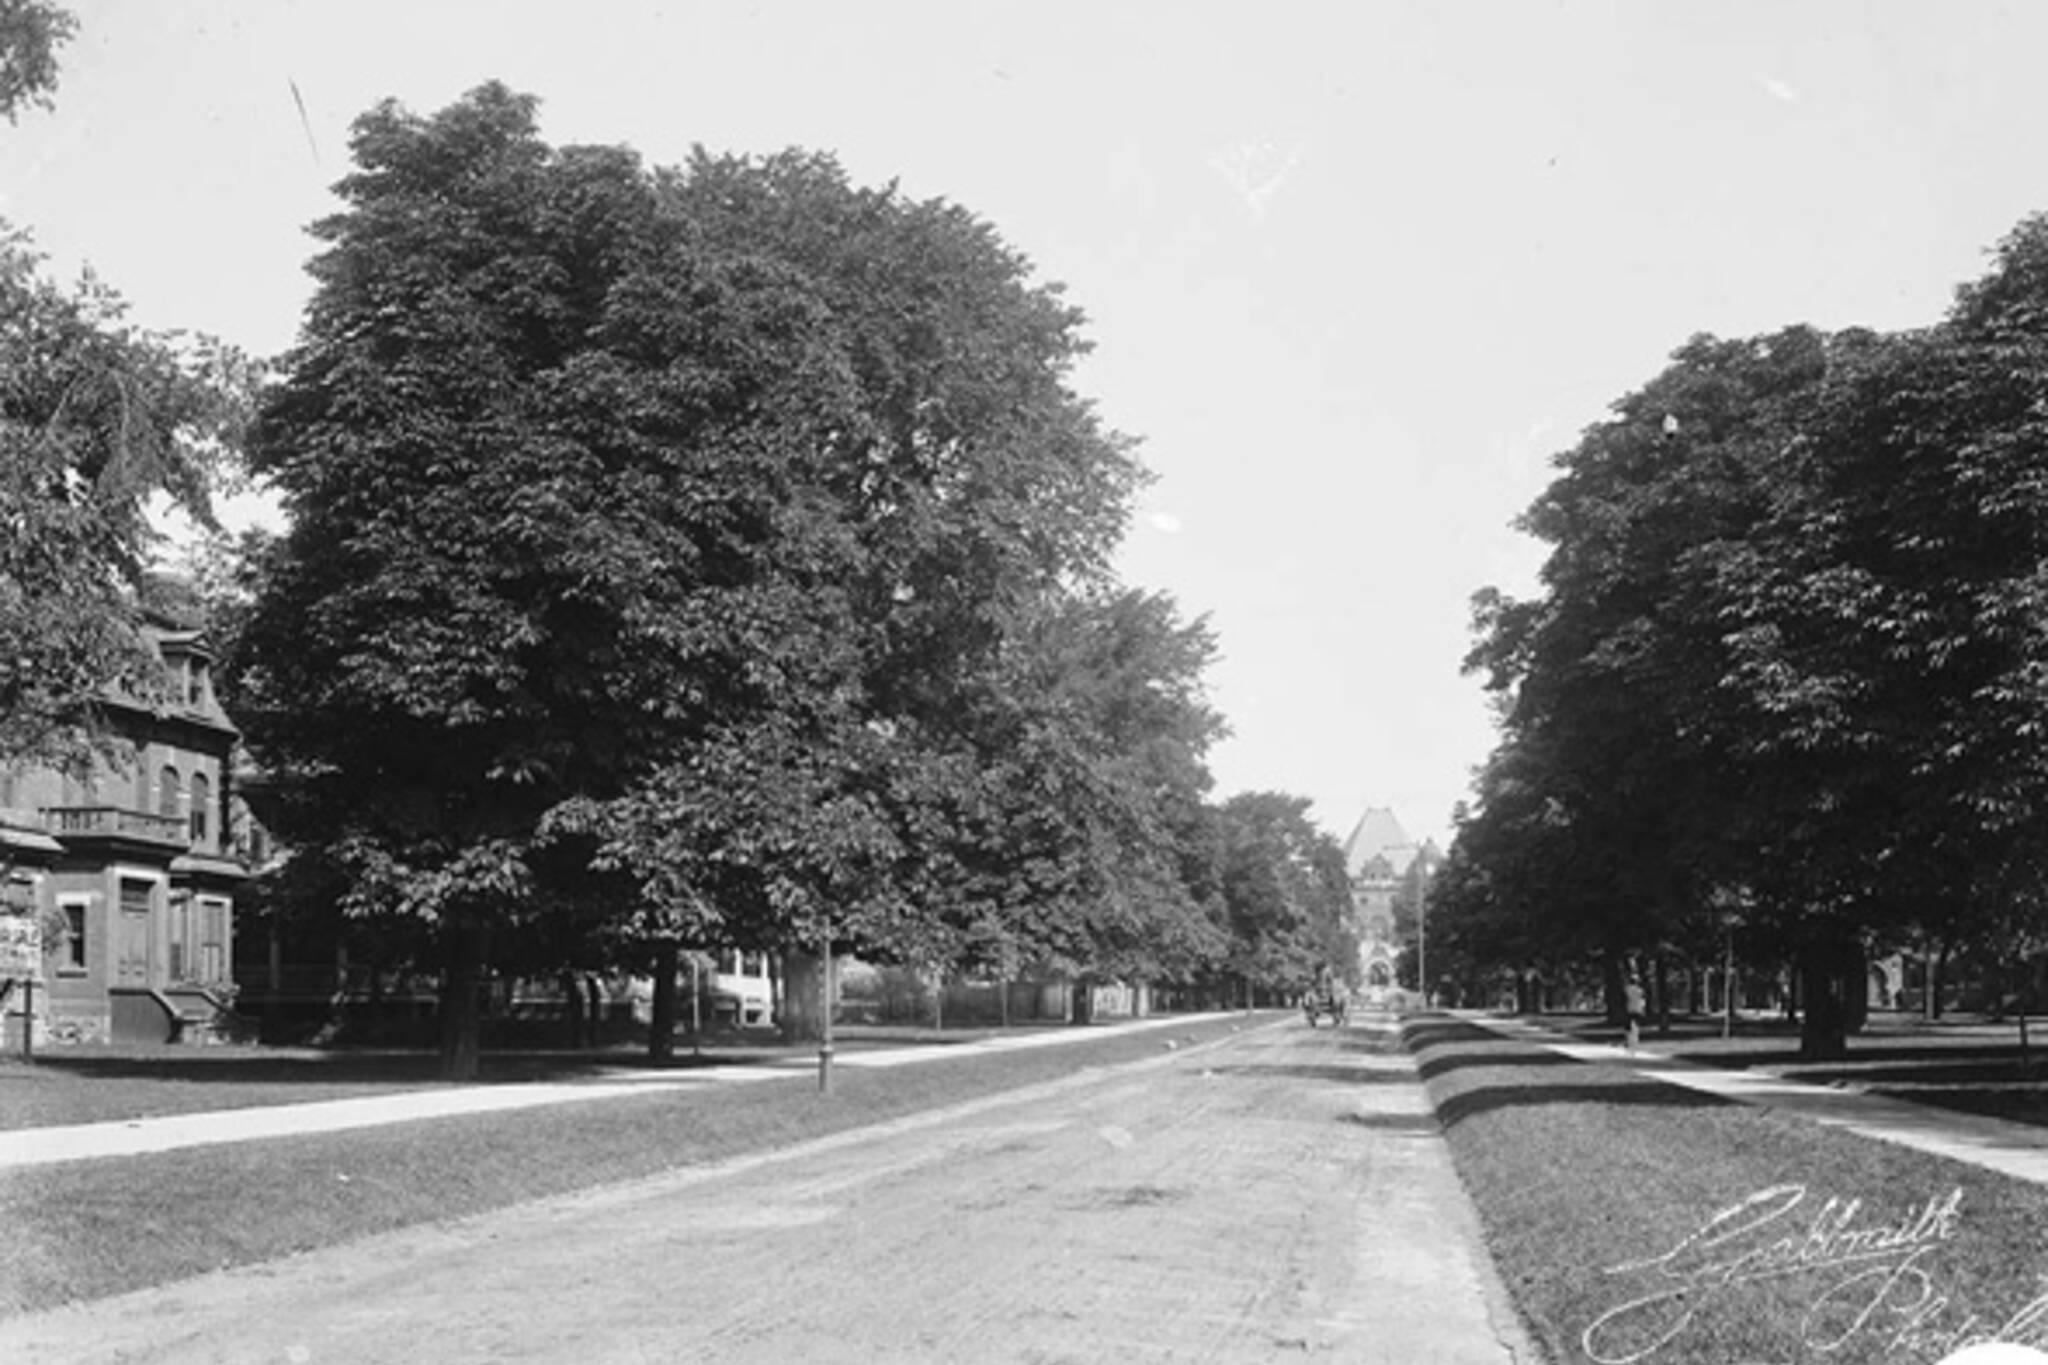 University Avenue History Toronto